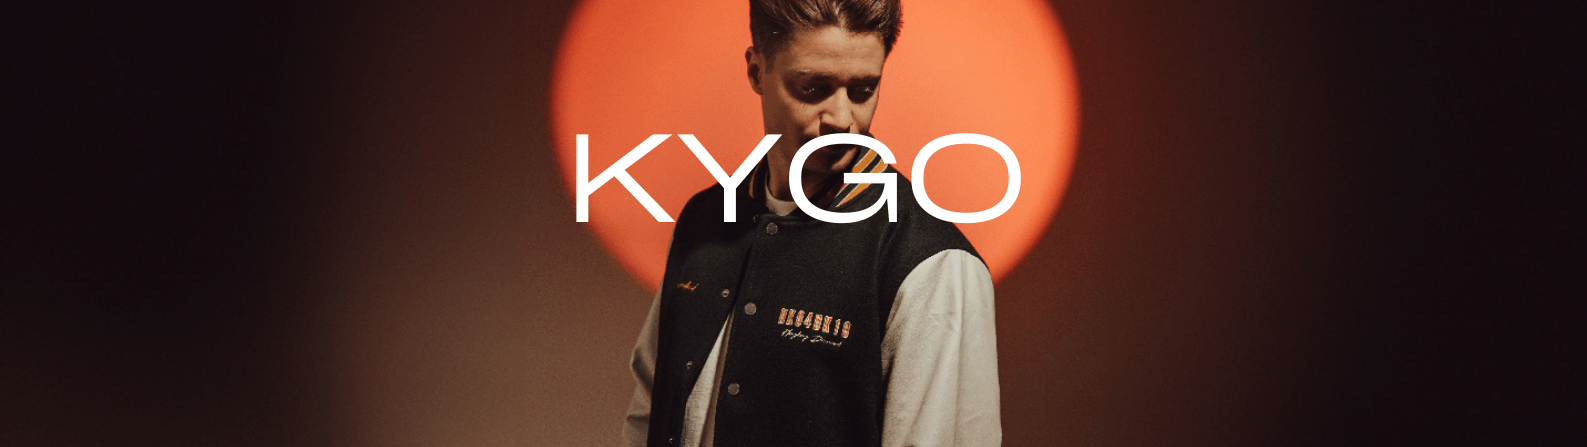 kygo-dj-concert-tickets-milan-madrid-paris